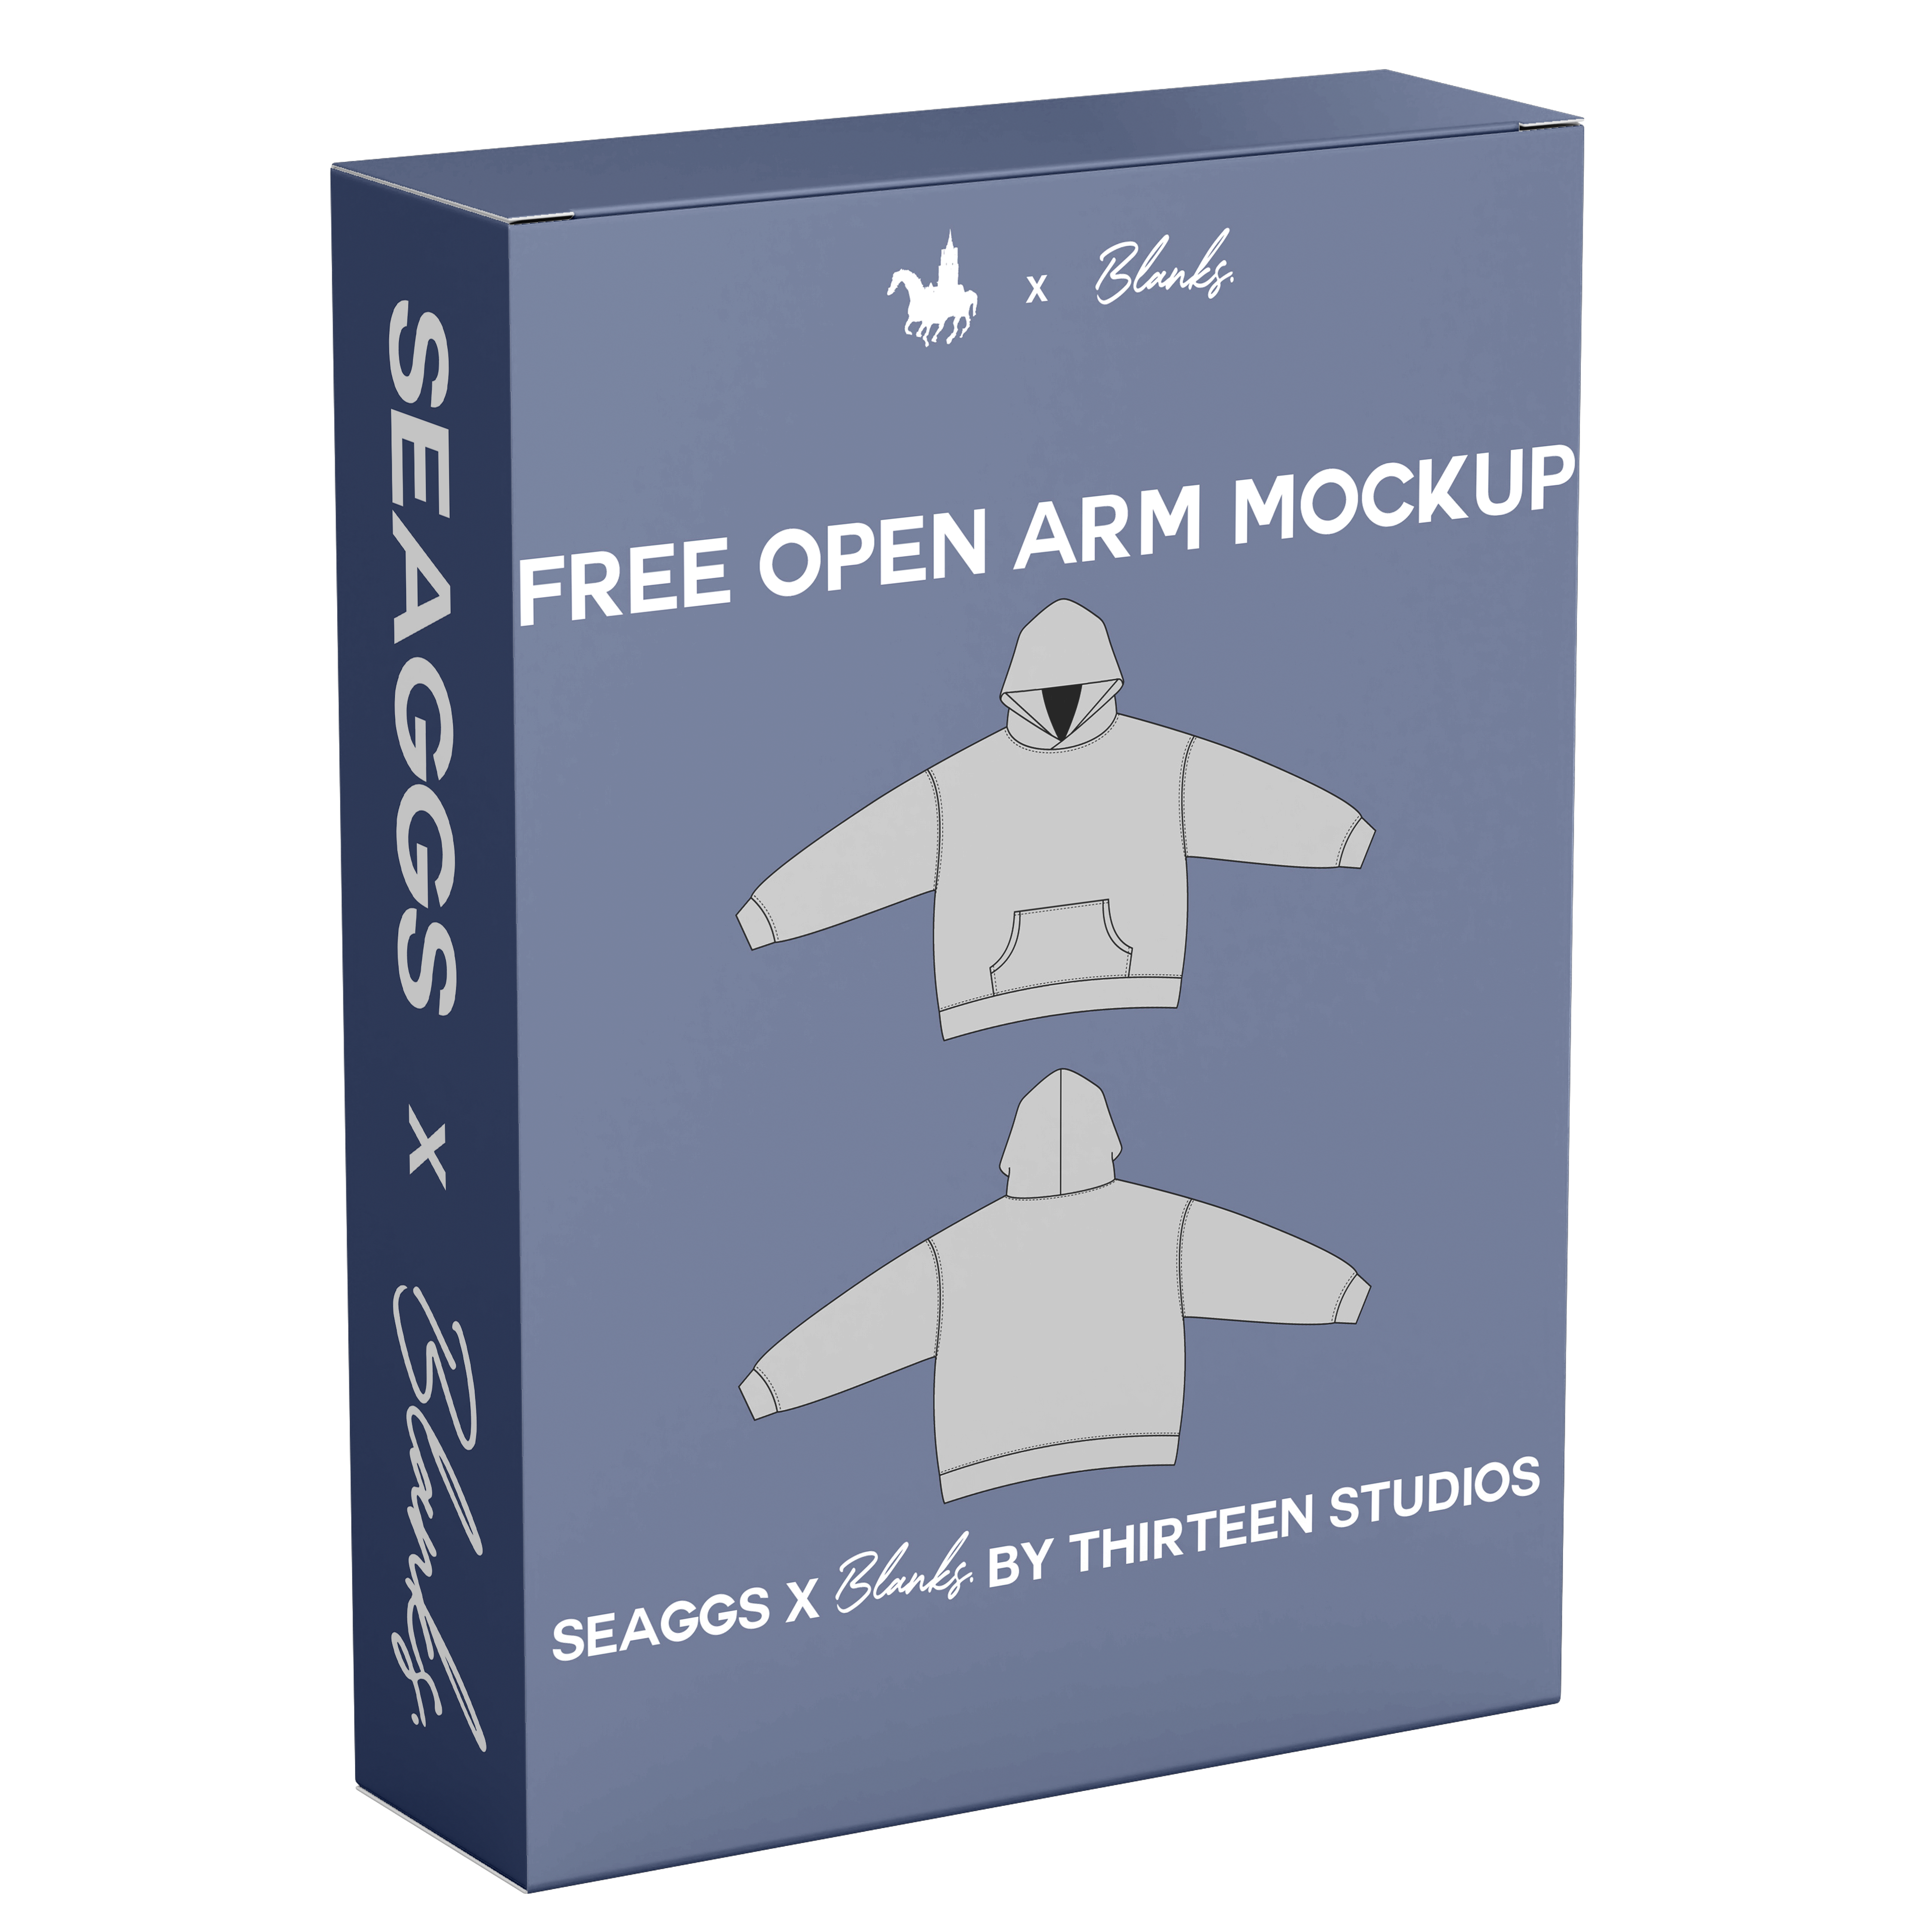 FREE "Blanks by Thirteen Studios" Open-Arm Mockup